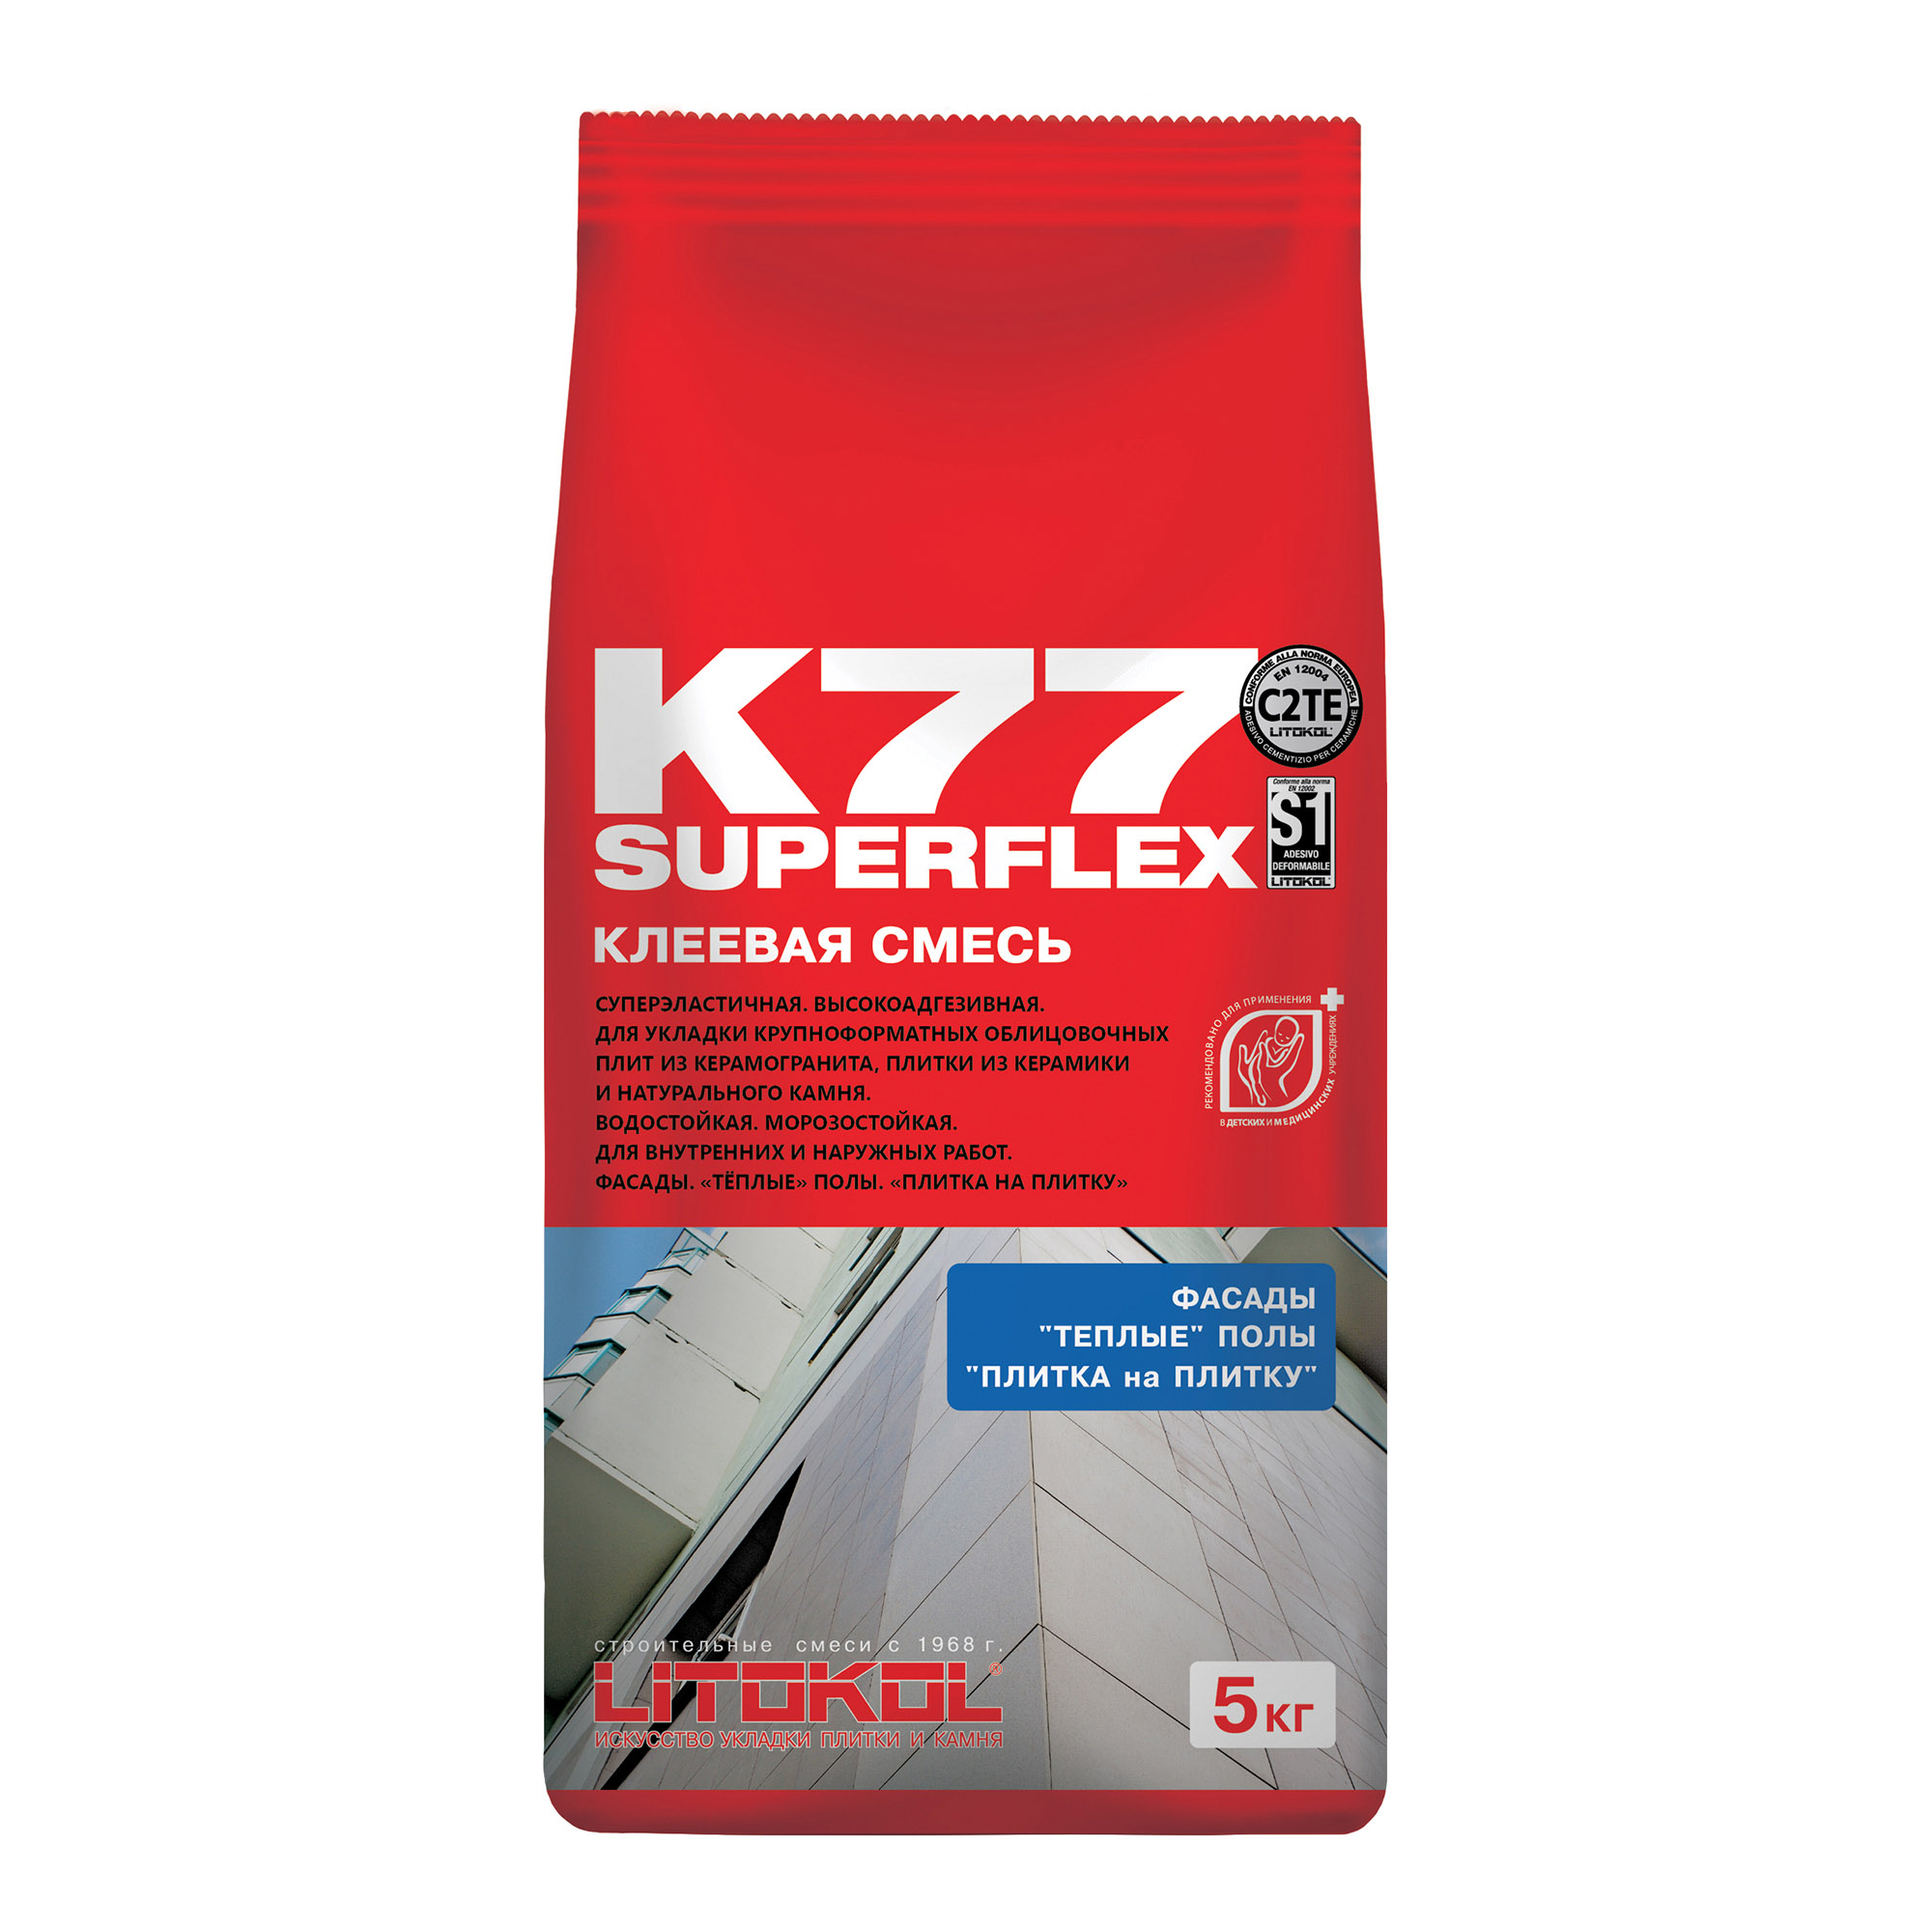  для плитки LITOKOL SuperFlex K77 (класс C2TE S1), 5 кг купите по .